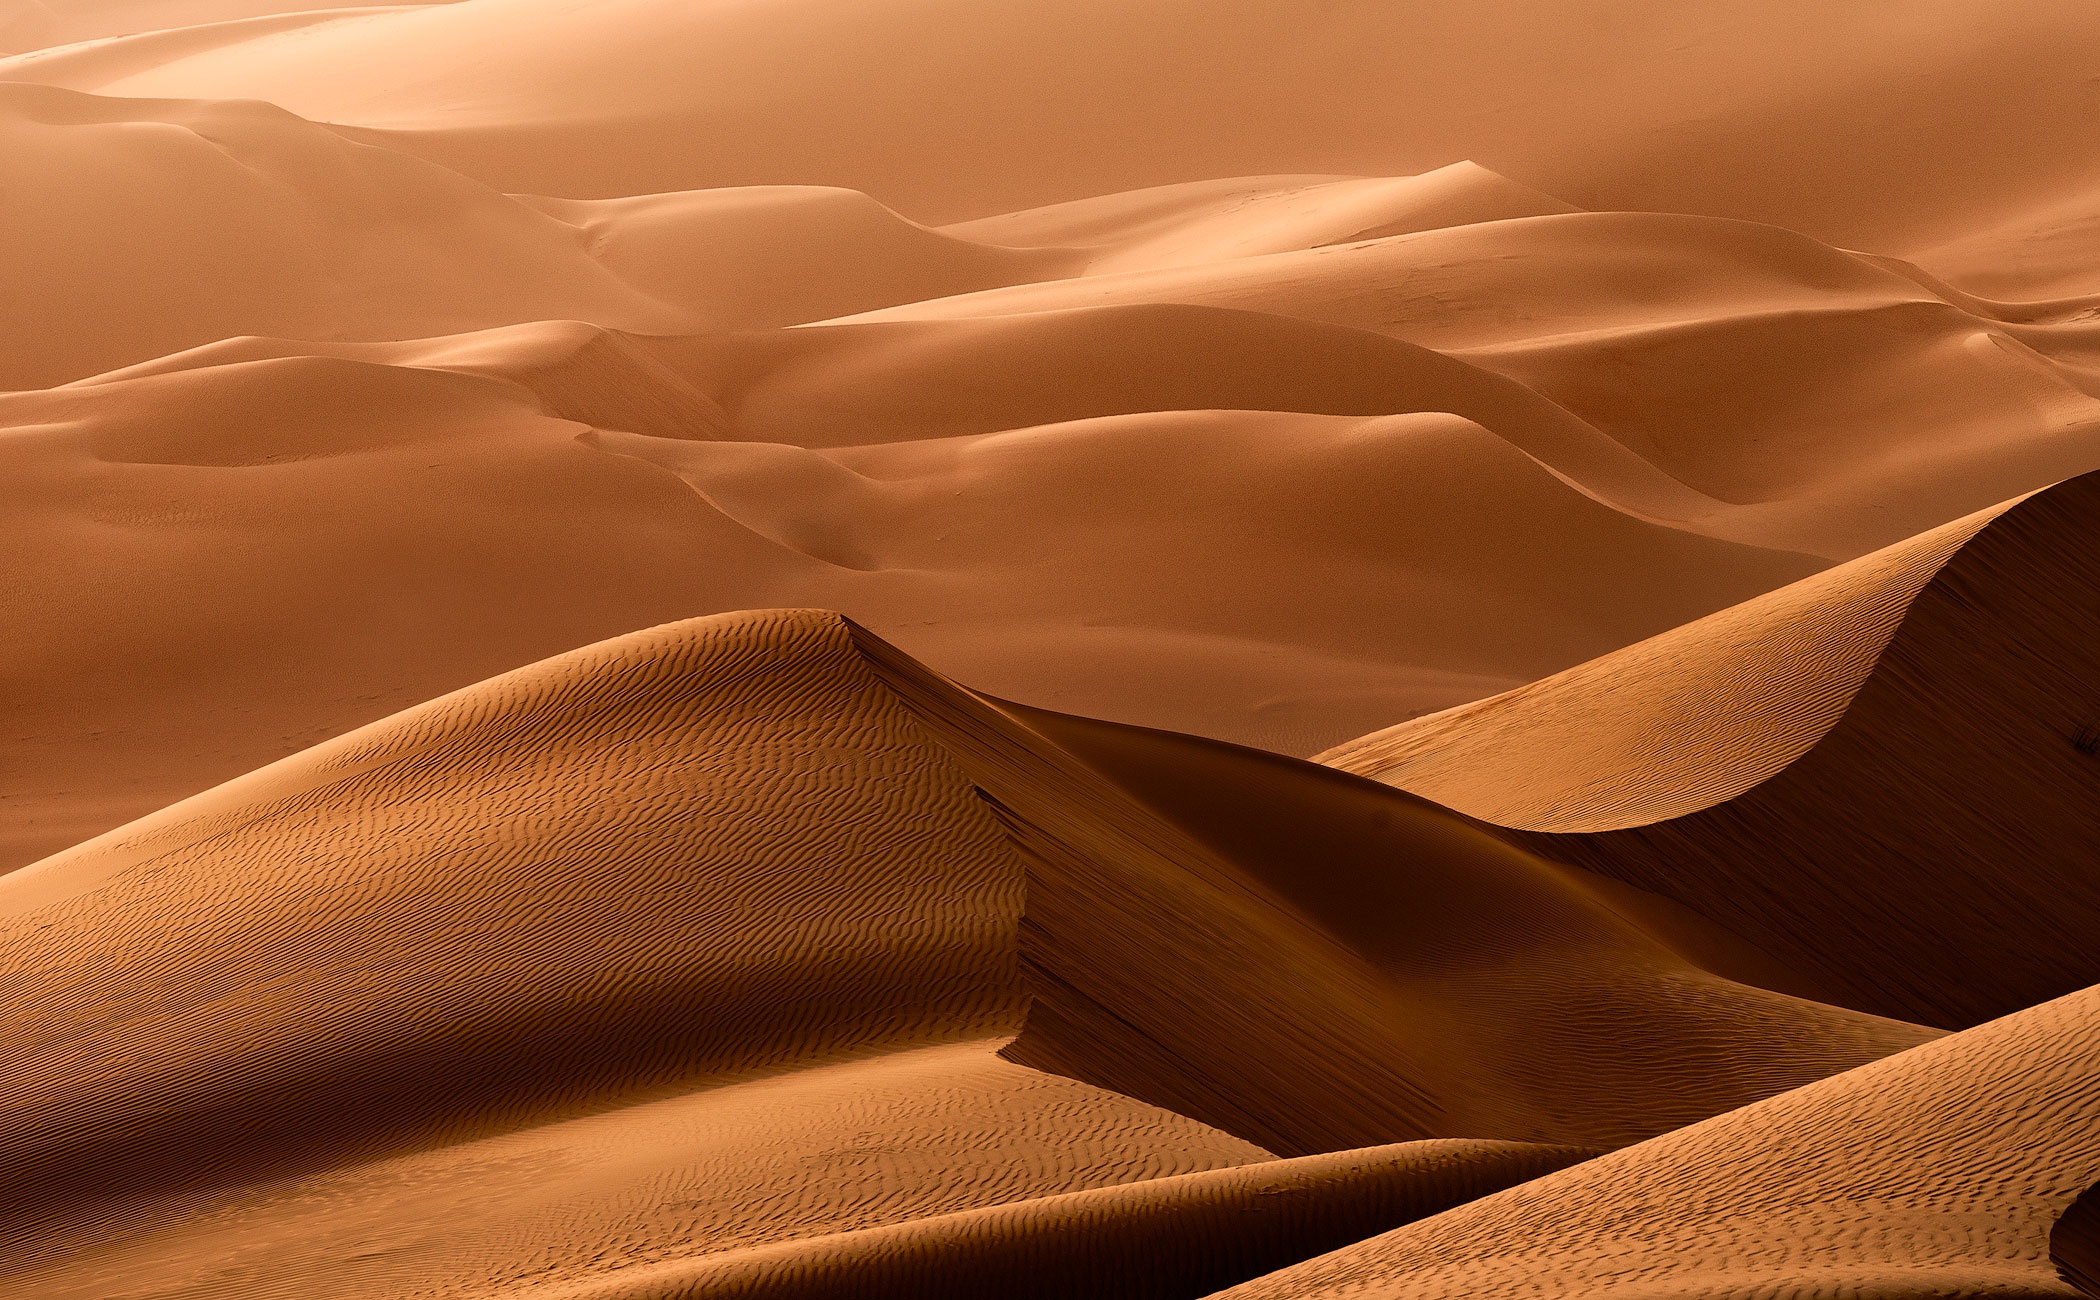 Desert Dune Landscape Wallpaperhd Nature Wallpapers4k Wallpapersimagesbackgroundsphotos And